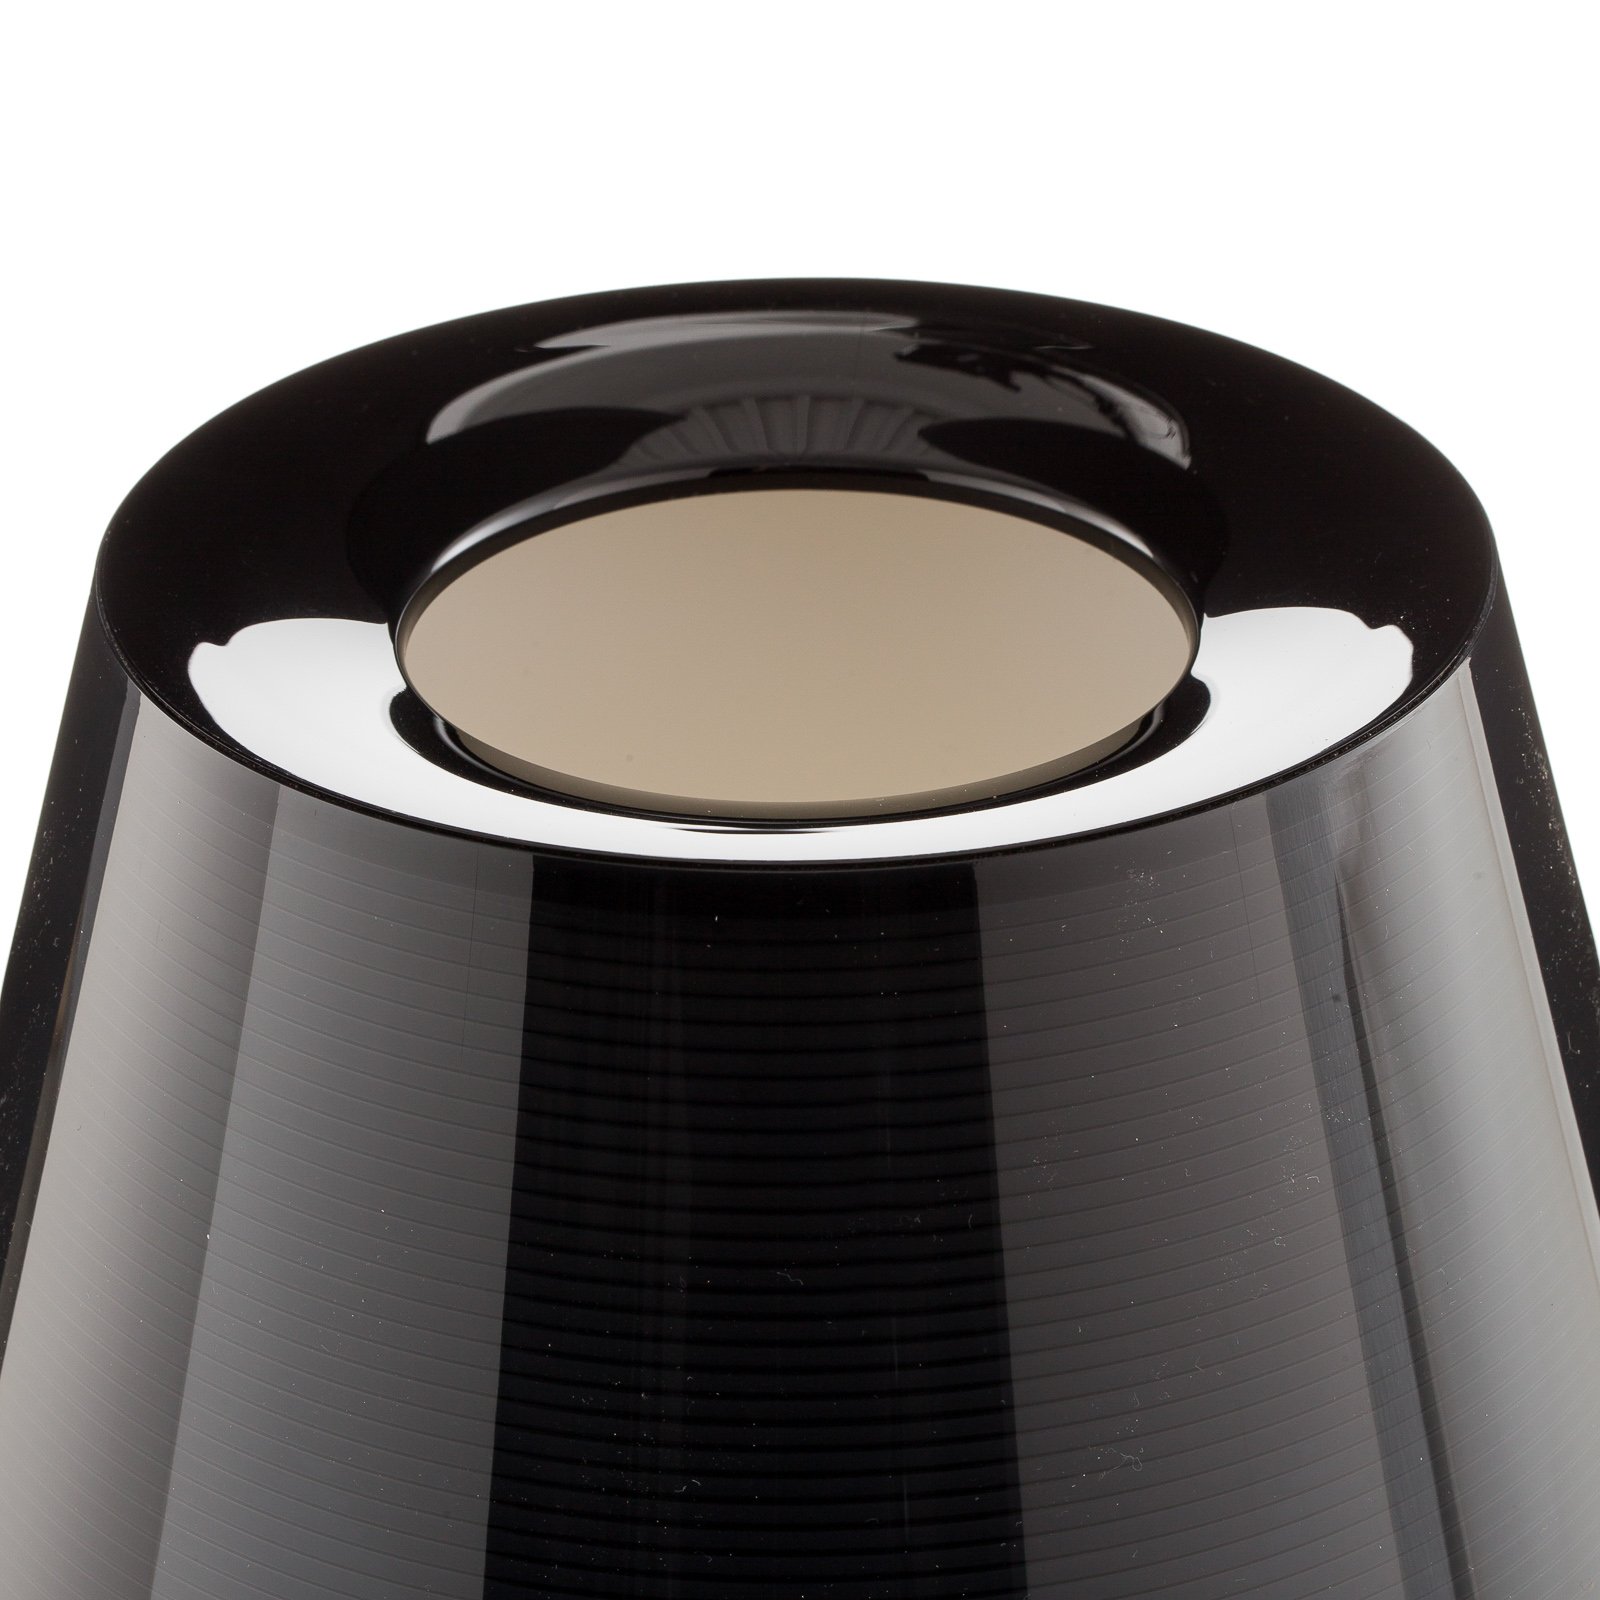 FLOS Miss K - Philippe Starck - lámpa fekete